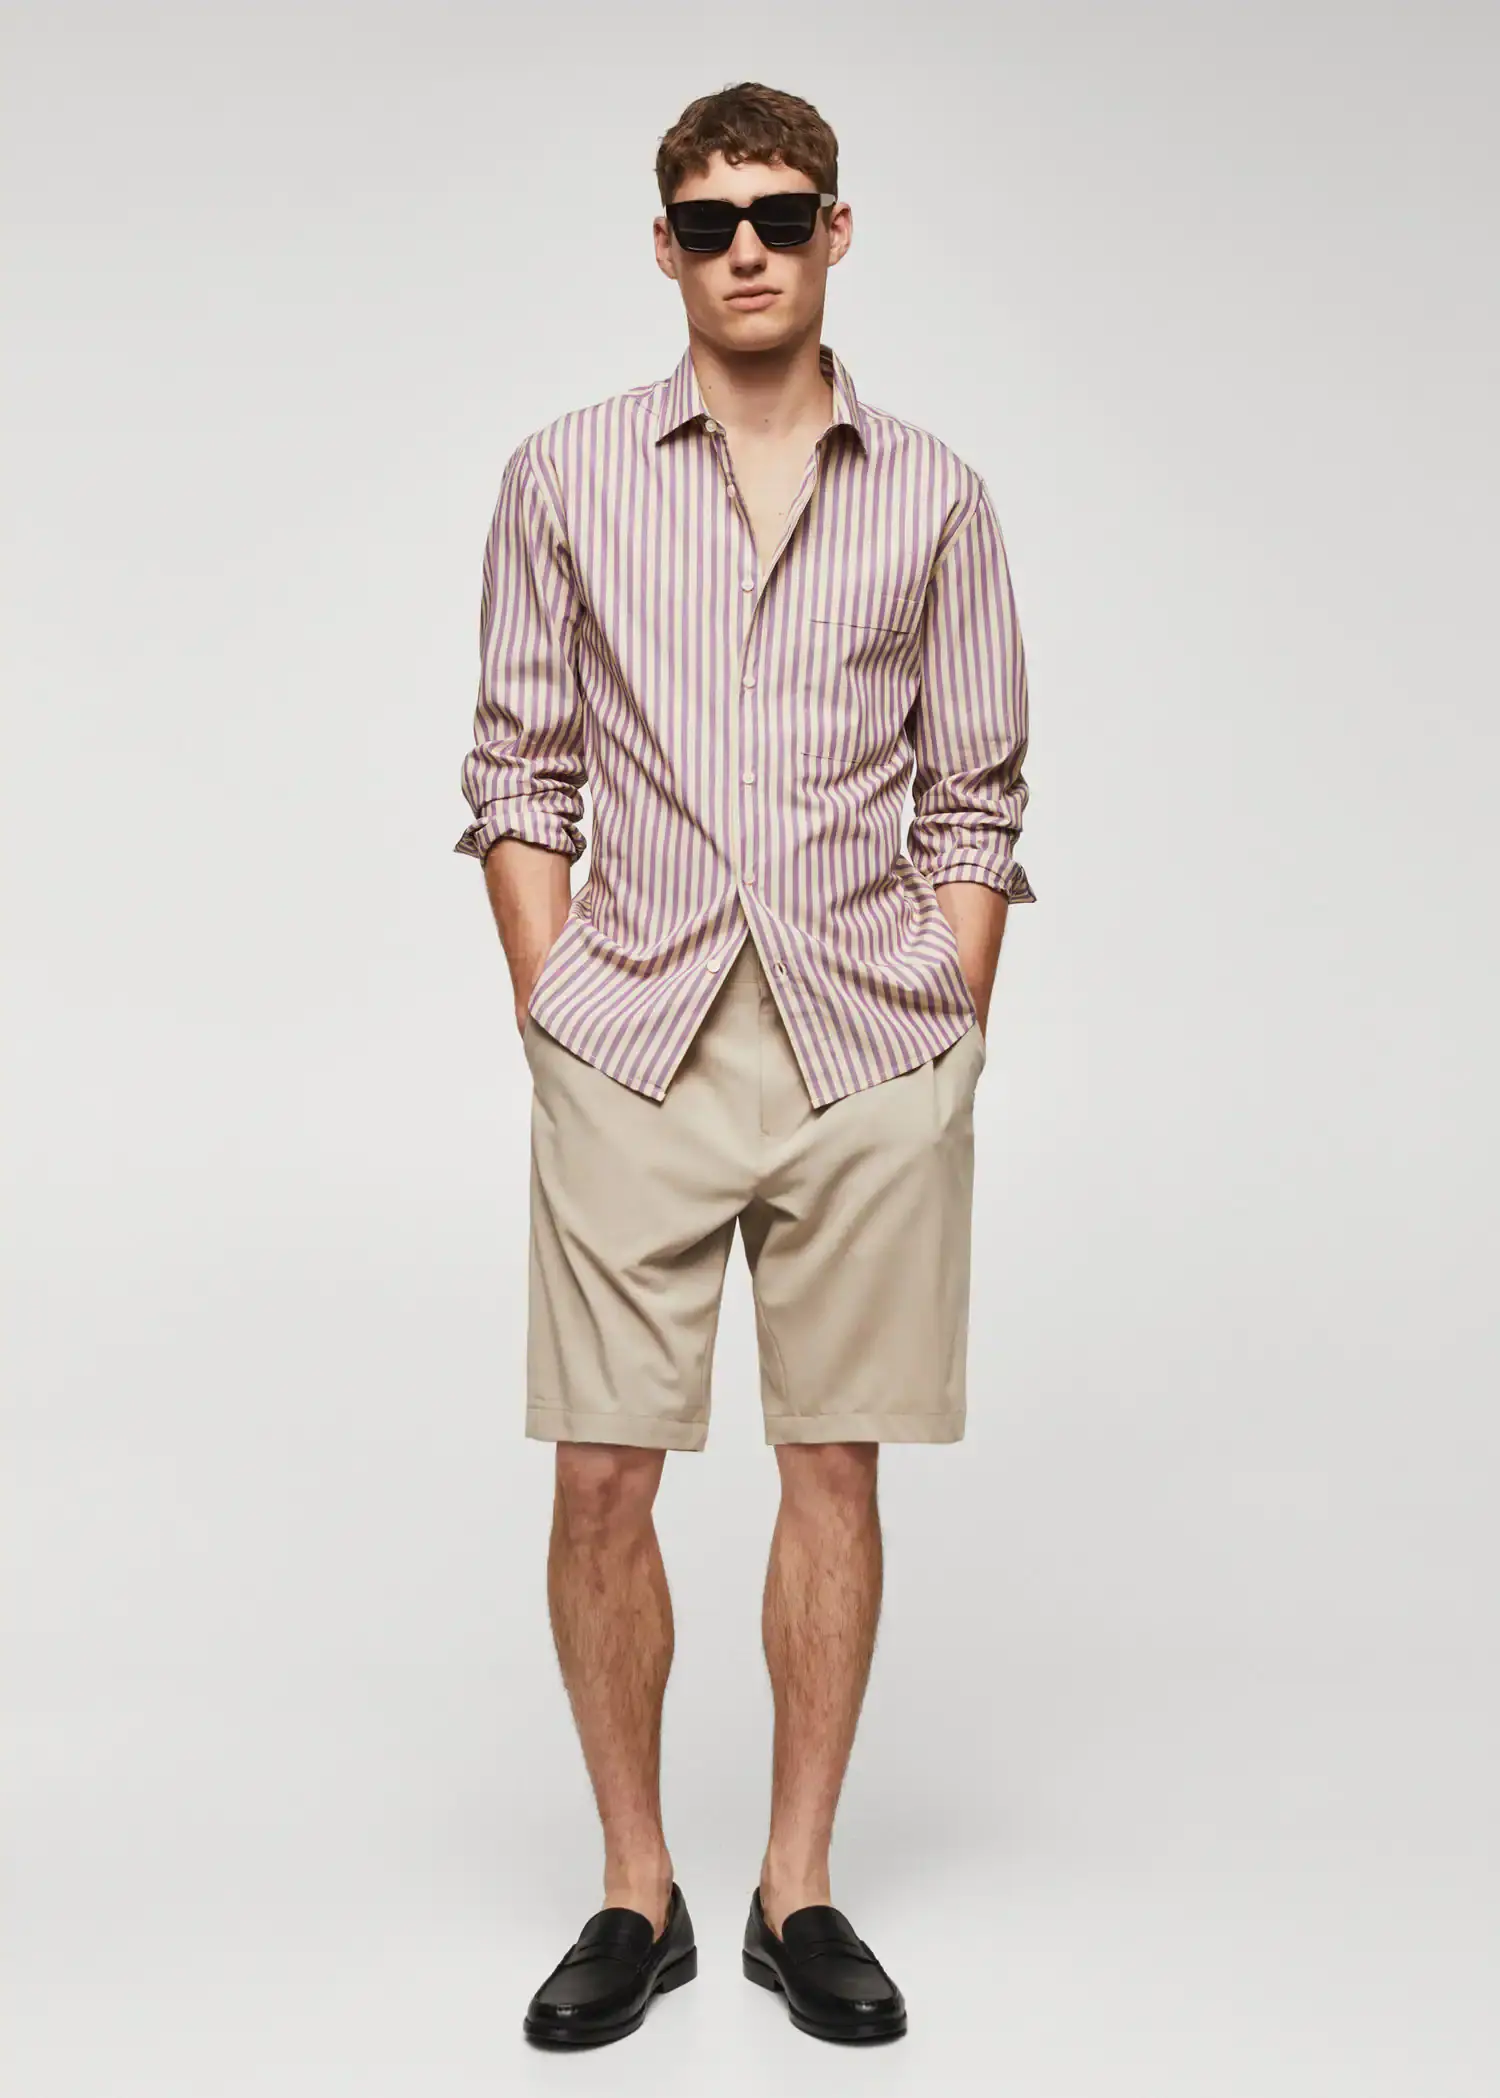 Mango 100% cotton Kodak striped shirt . a man in shorts and a striped button up. 